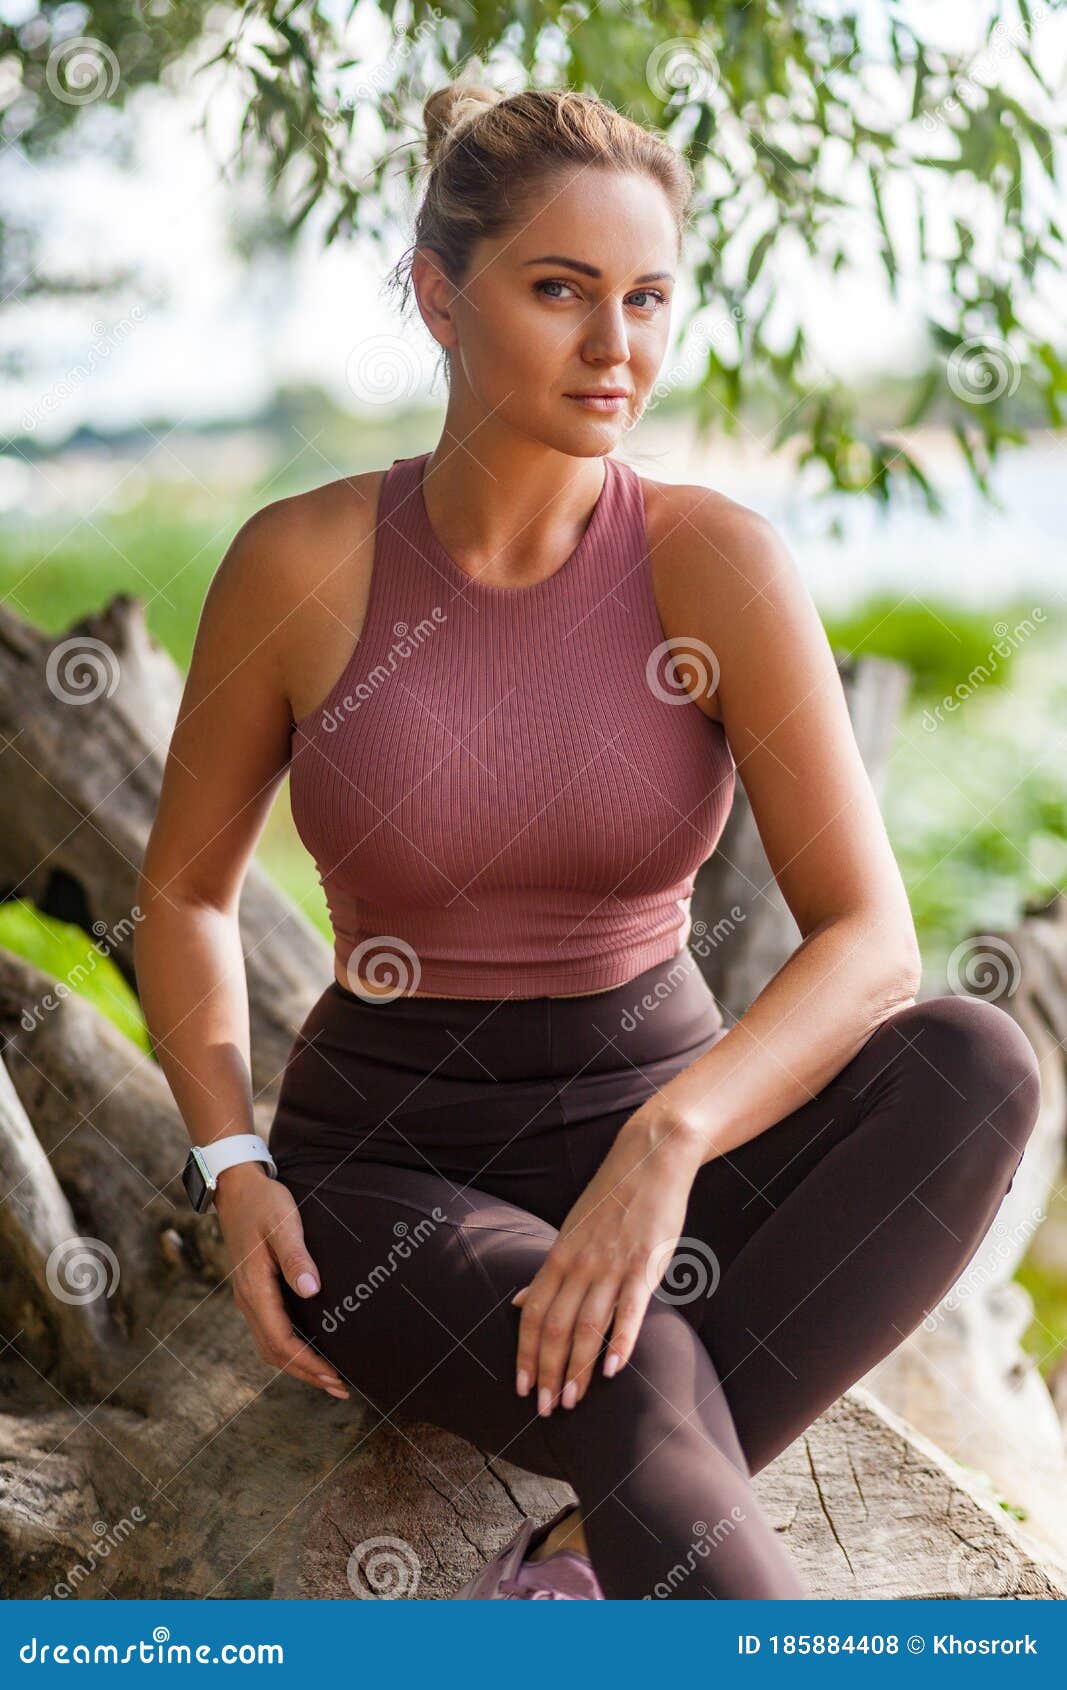 chris botero add photo sexy women in yoga pants